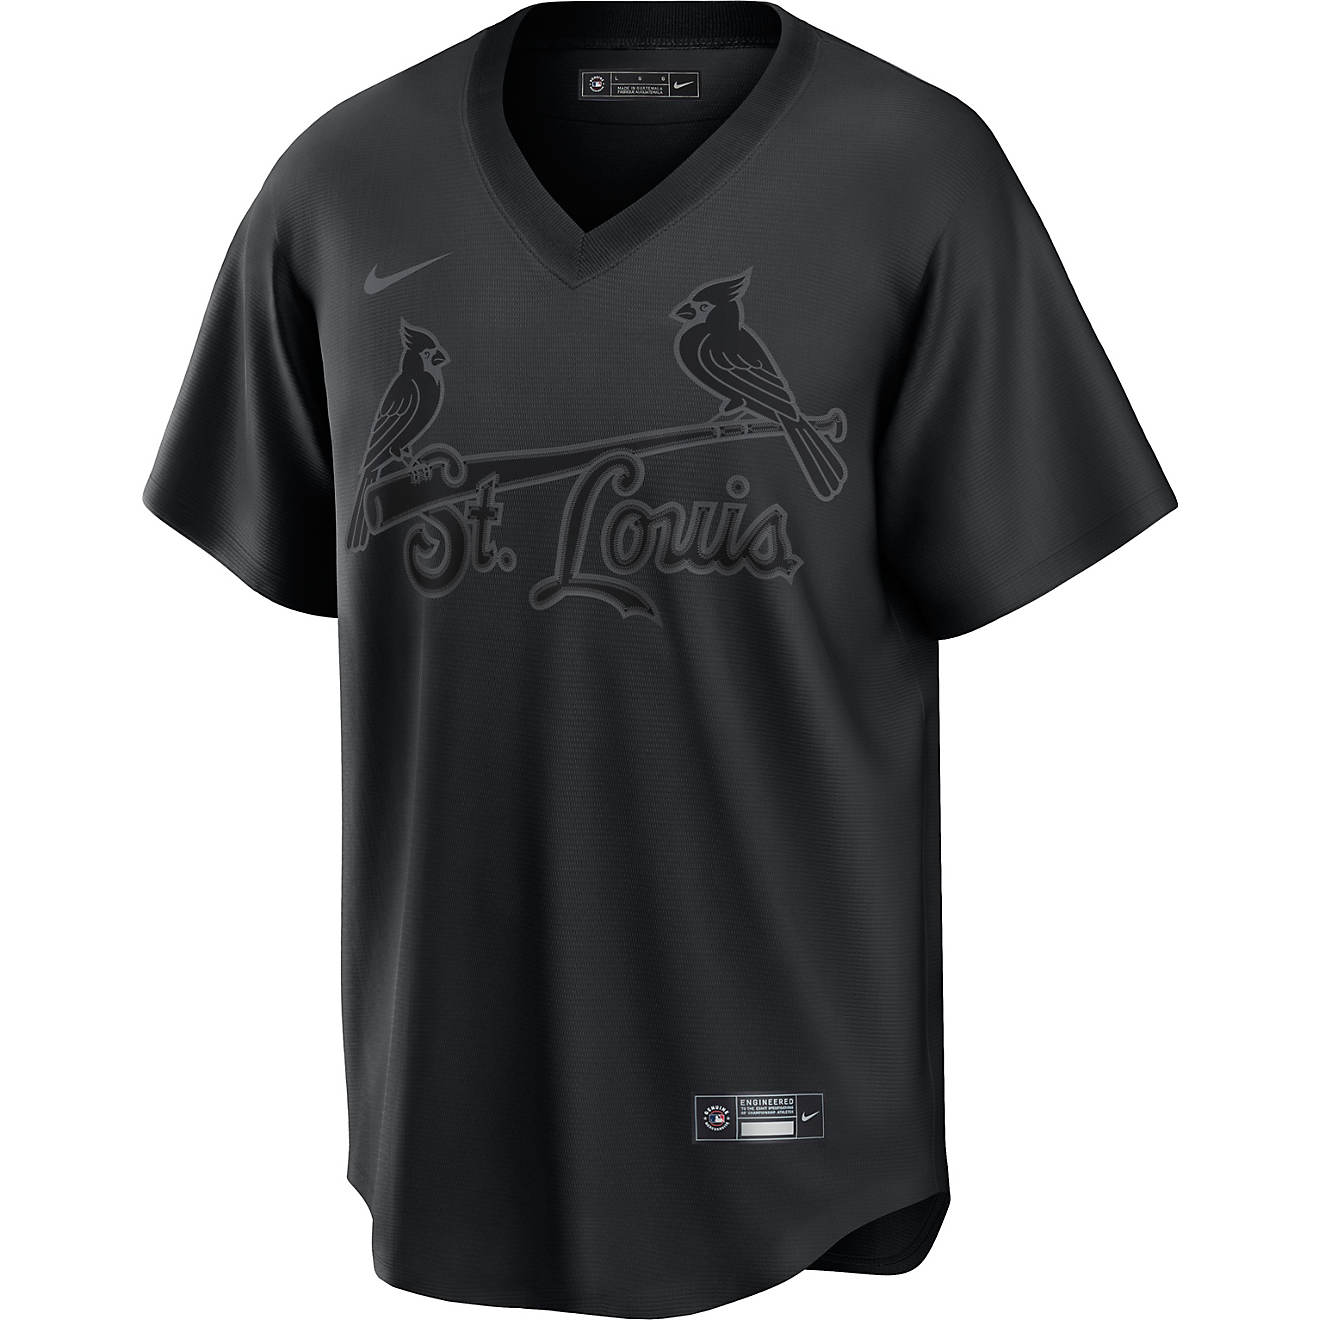 Nike Men's St. Louis Cardinals Pitch Black Replica Jersey